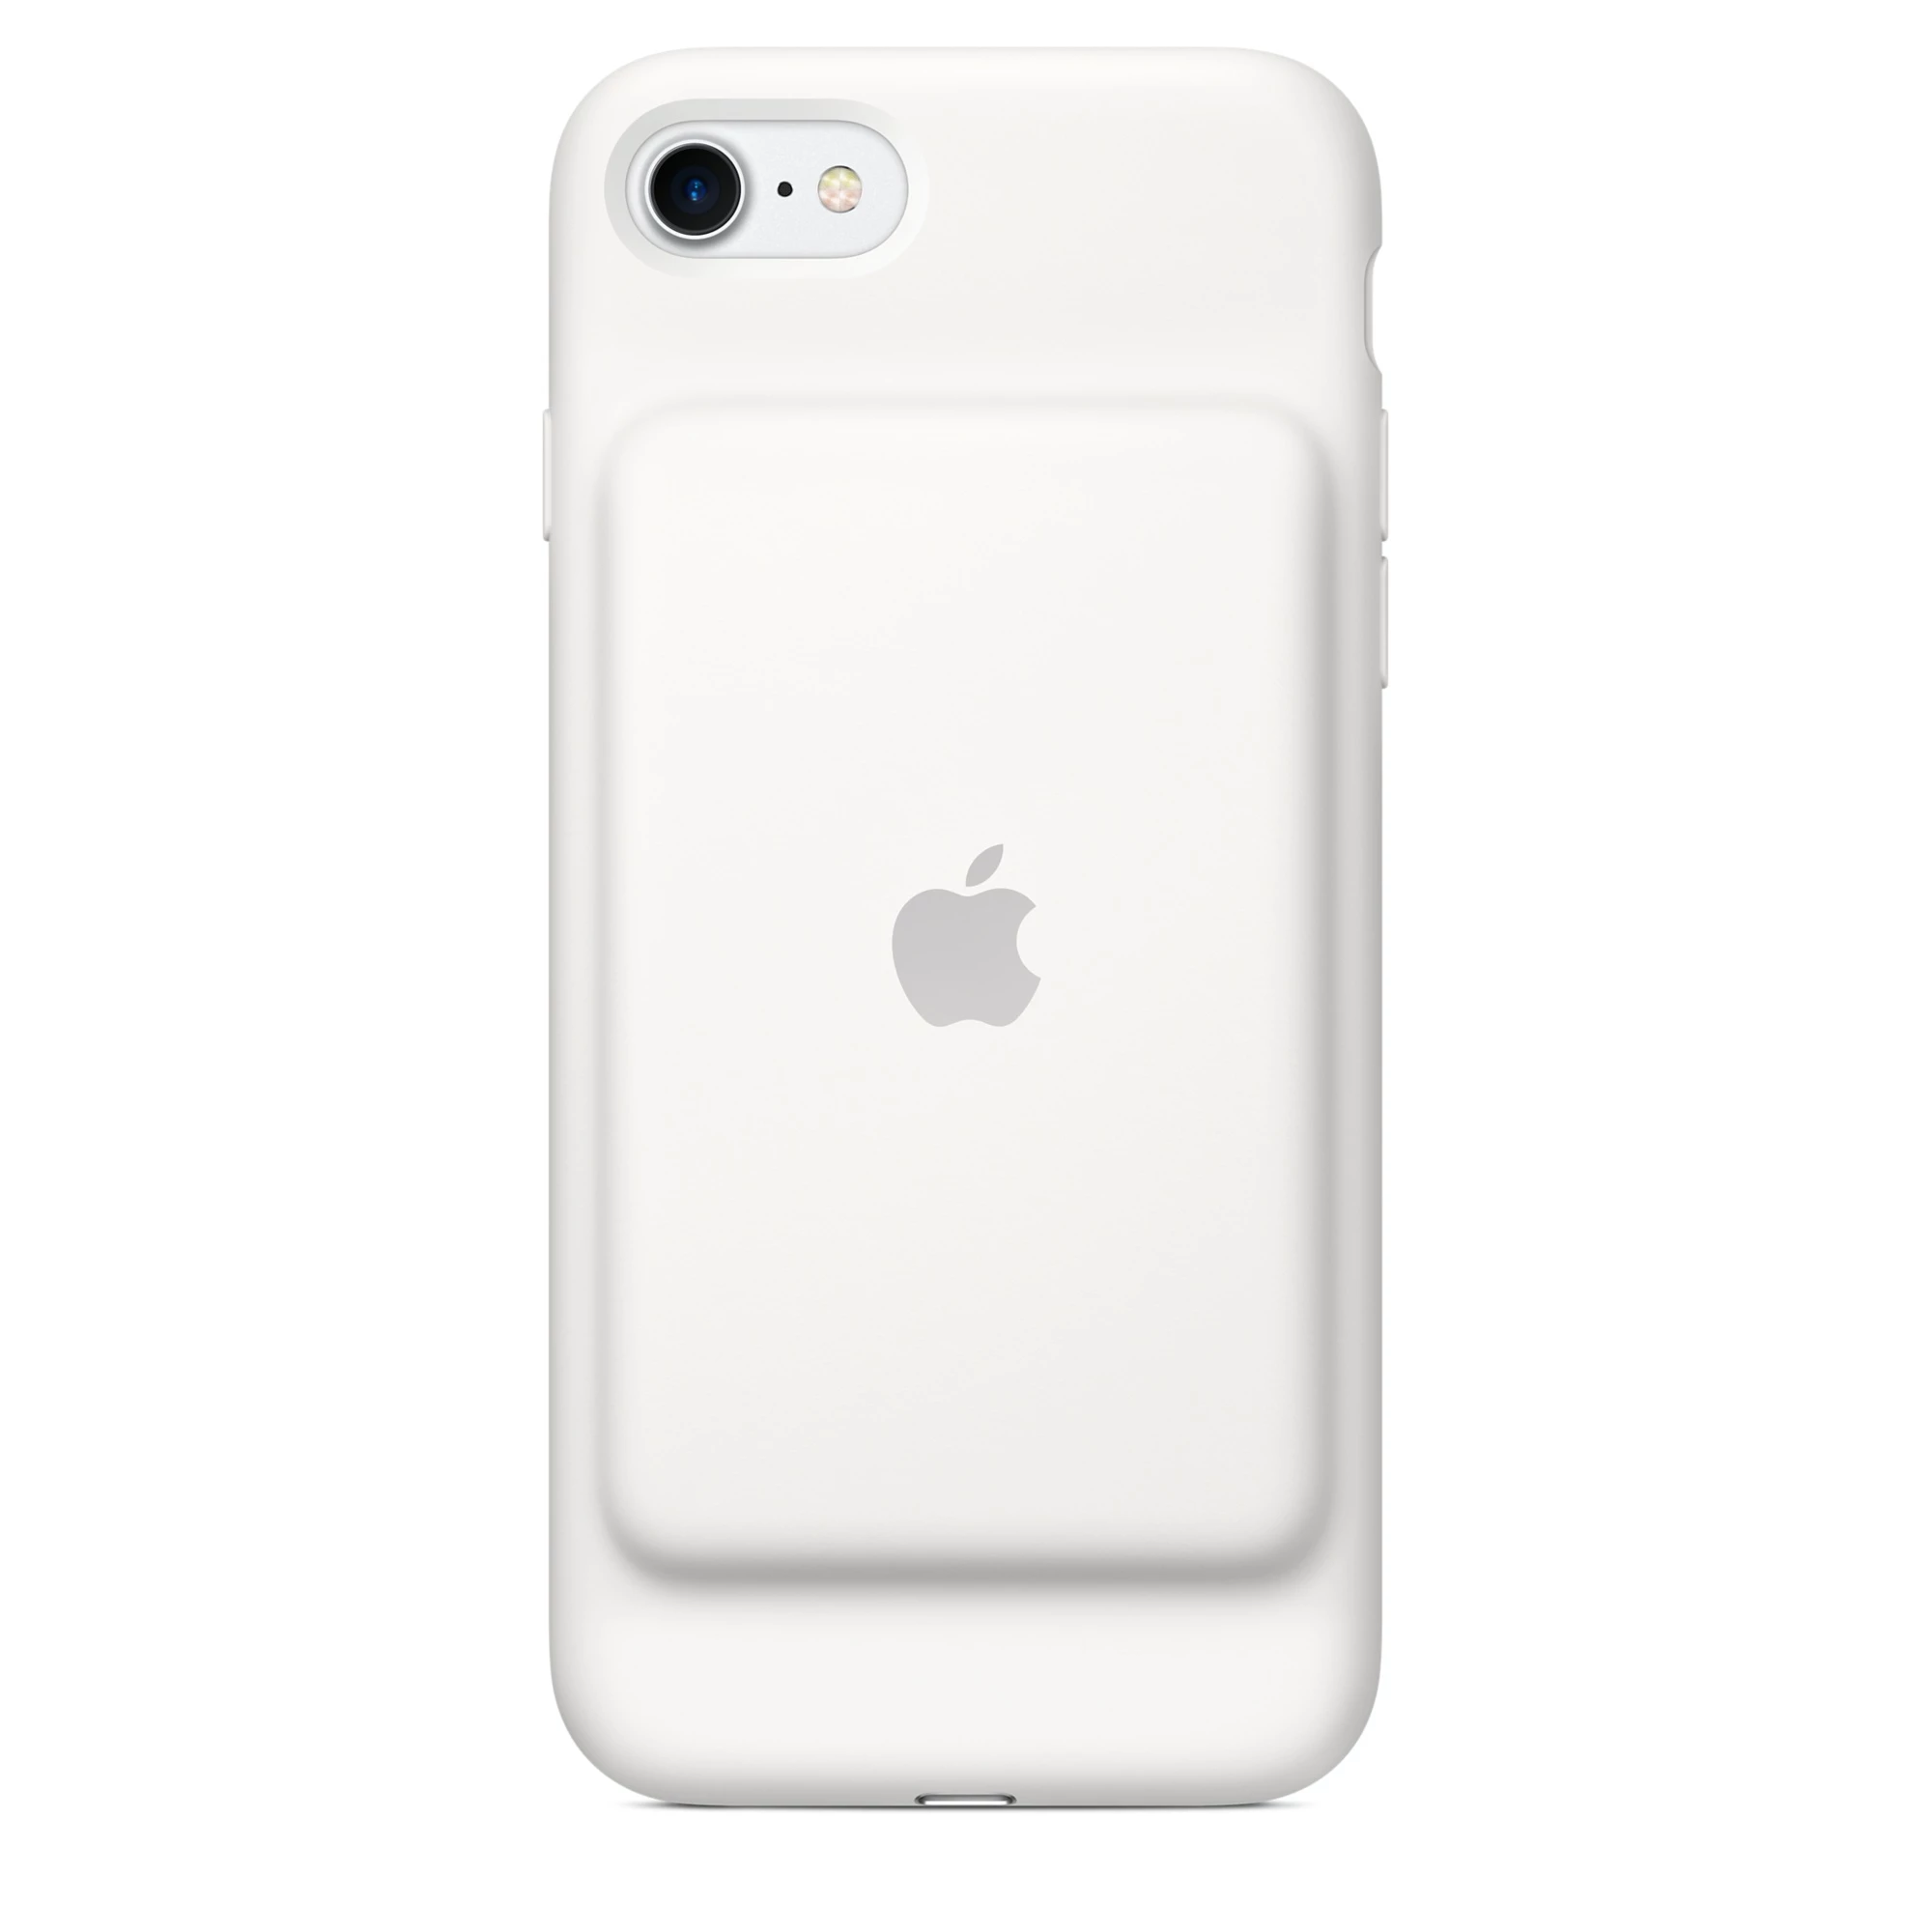 Apple iPhone SE 2 Smart Battery Case Update! 